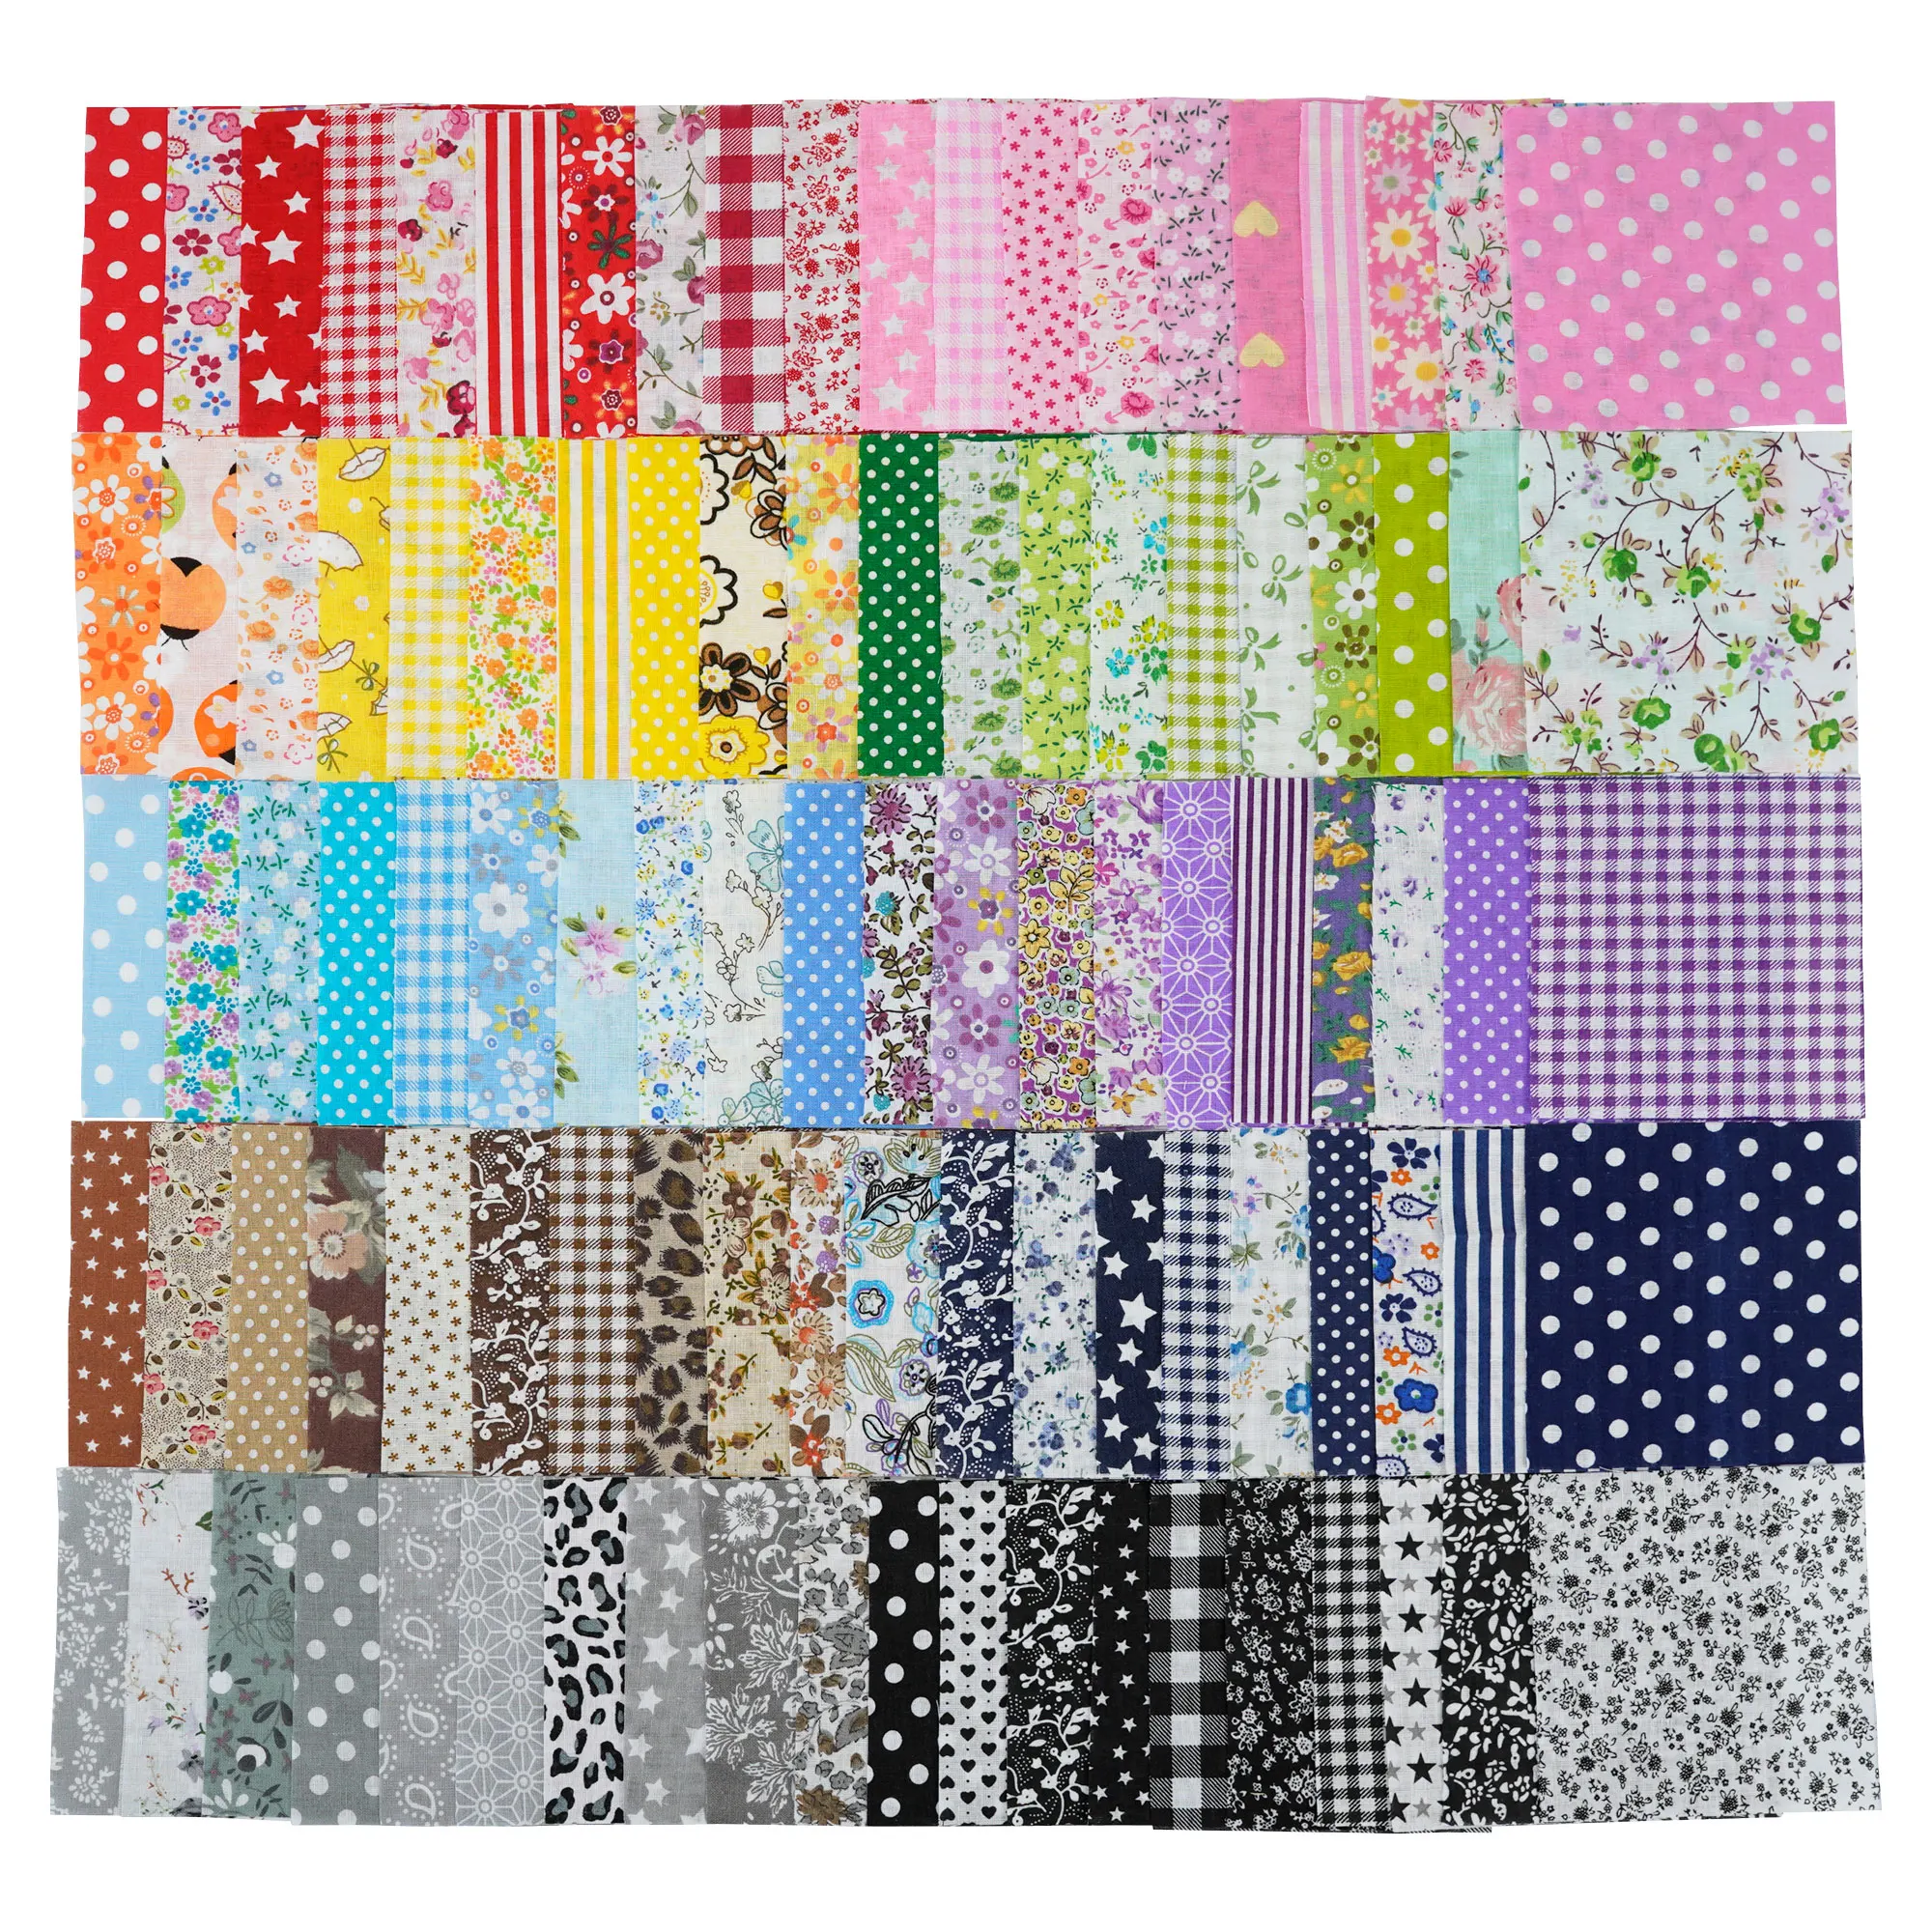 100PCS 25x25cm/10x10cm Squares Cotton Craft Floral Fabric Cloths for DIY Bundle Patchwork Quilting Sewing Scrapbooking Artcraft